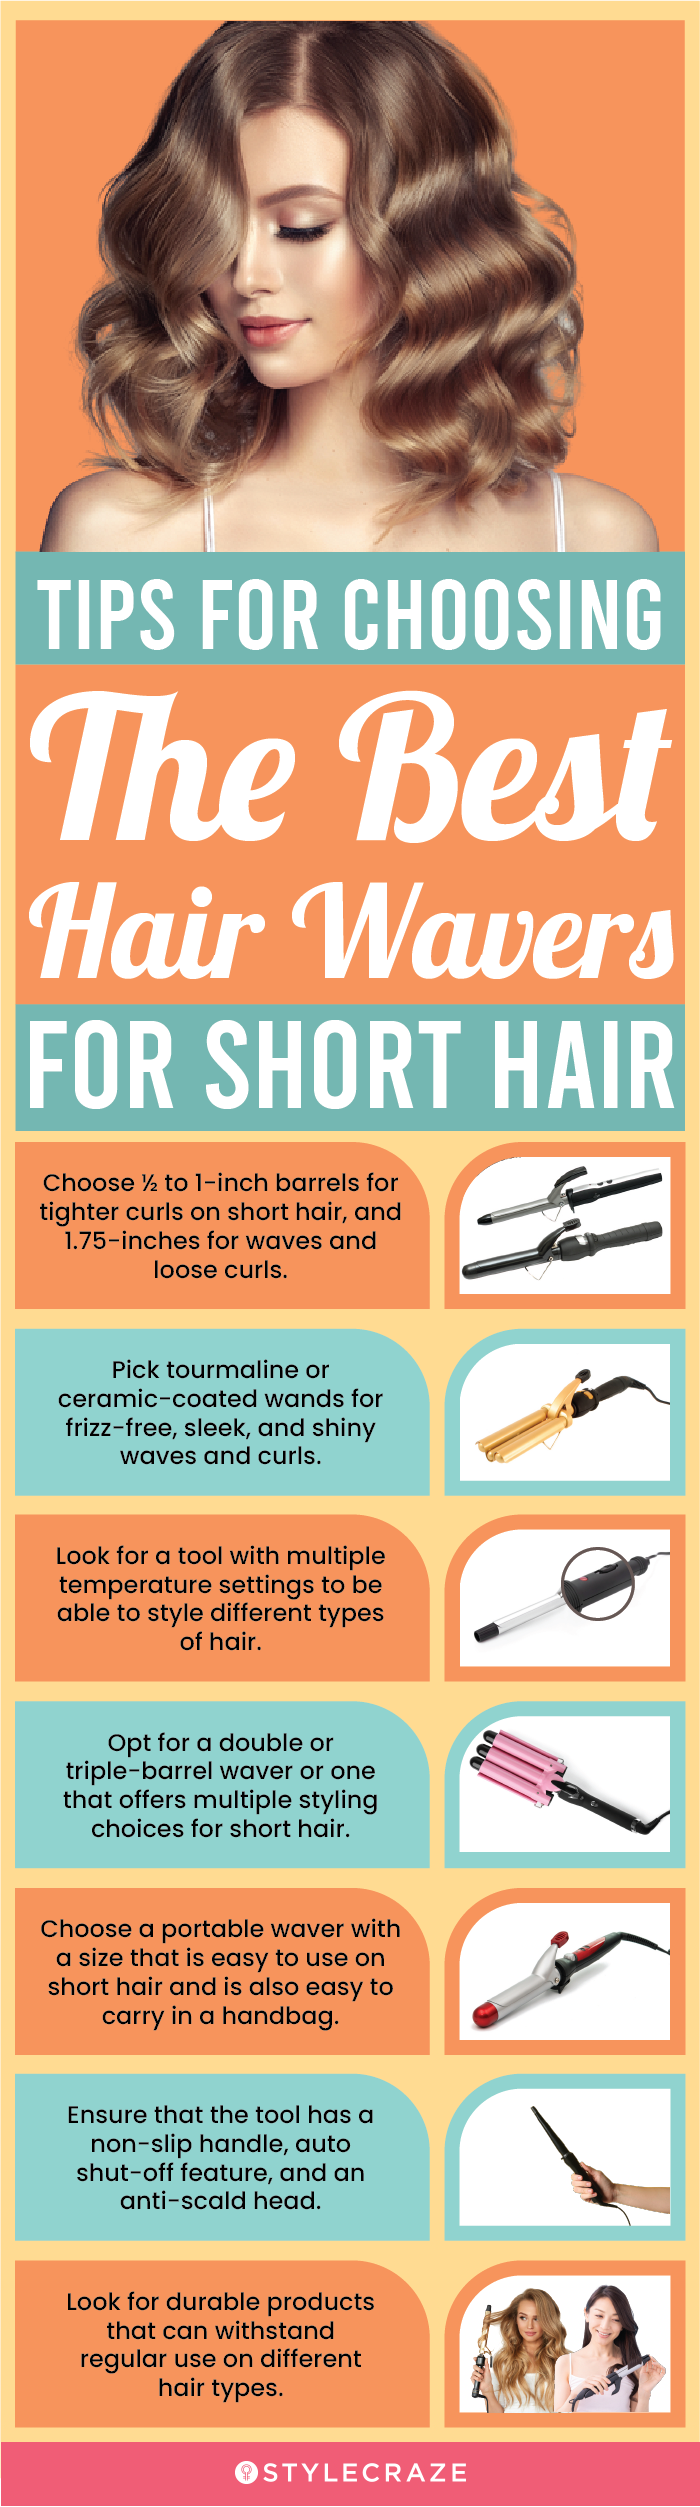 Tips For Choosing The Best Hair Wavers For Short Hair (infographic)